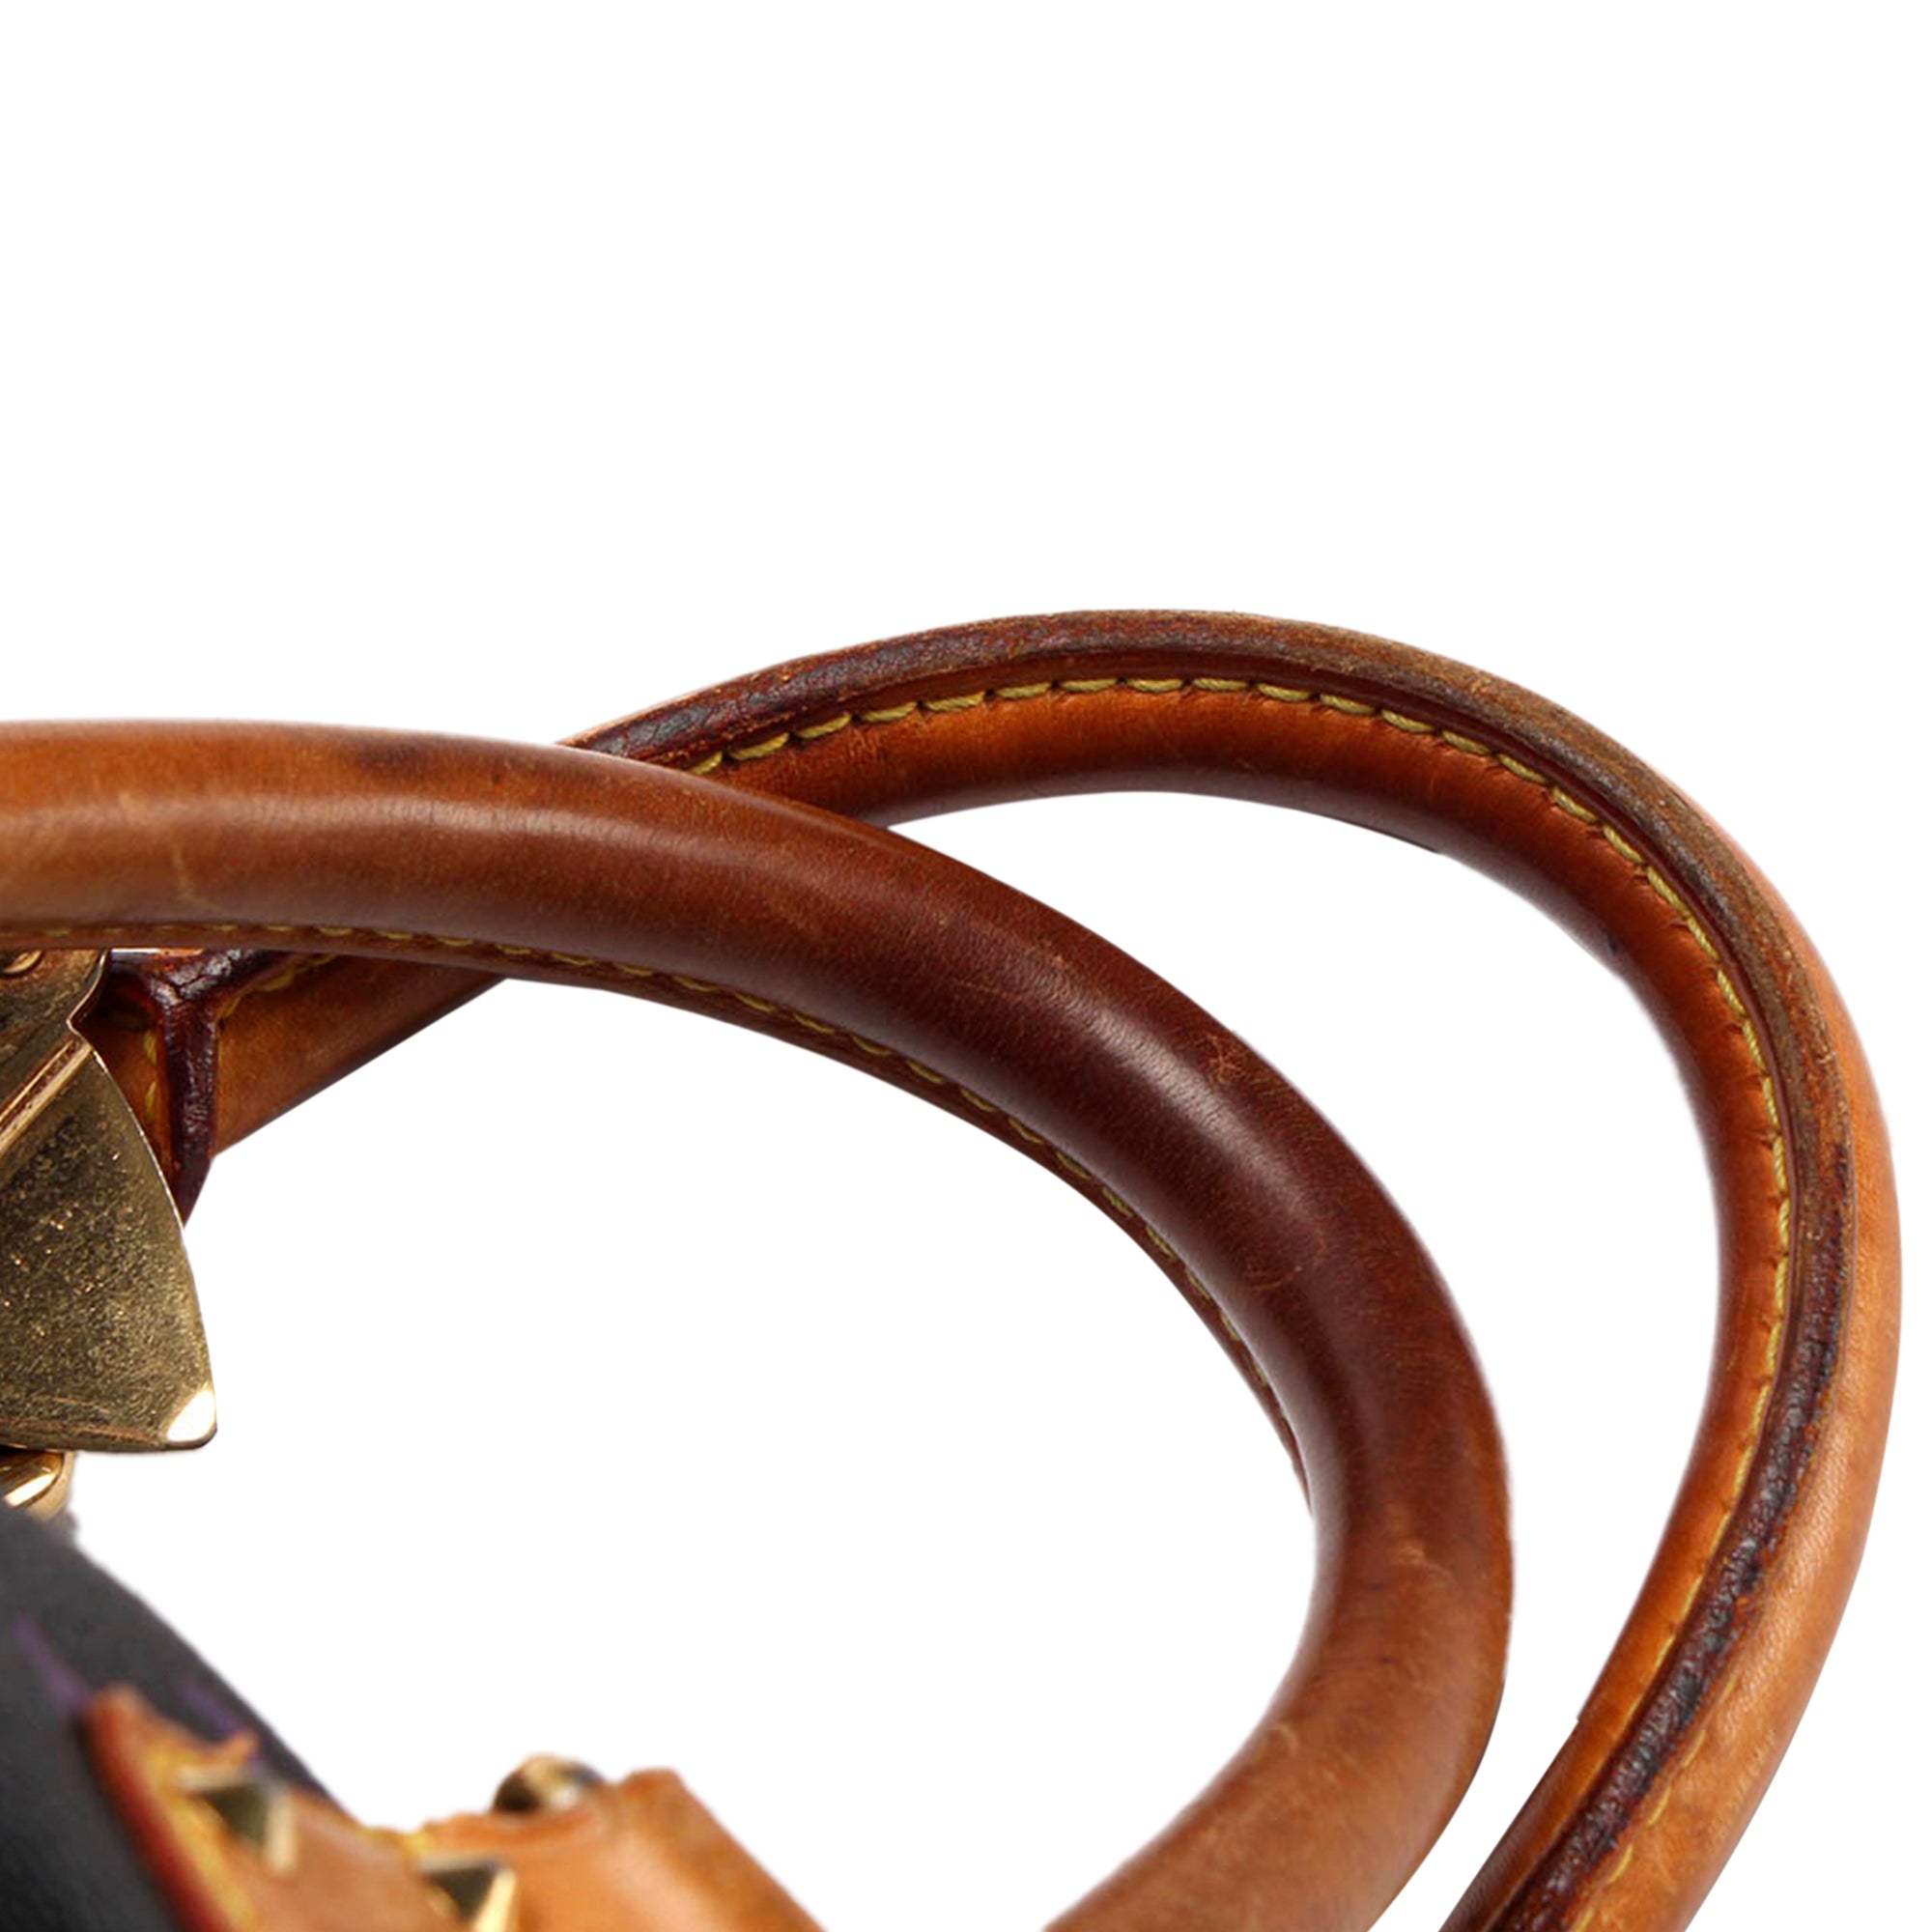 2014 Louis Vuitton Speedy 30 with dust bag lock & keys - $799  www.SHOPDUCKPIN.com #towson #timonium #huntvalley #rolandpark #baltimore…